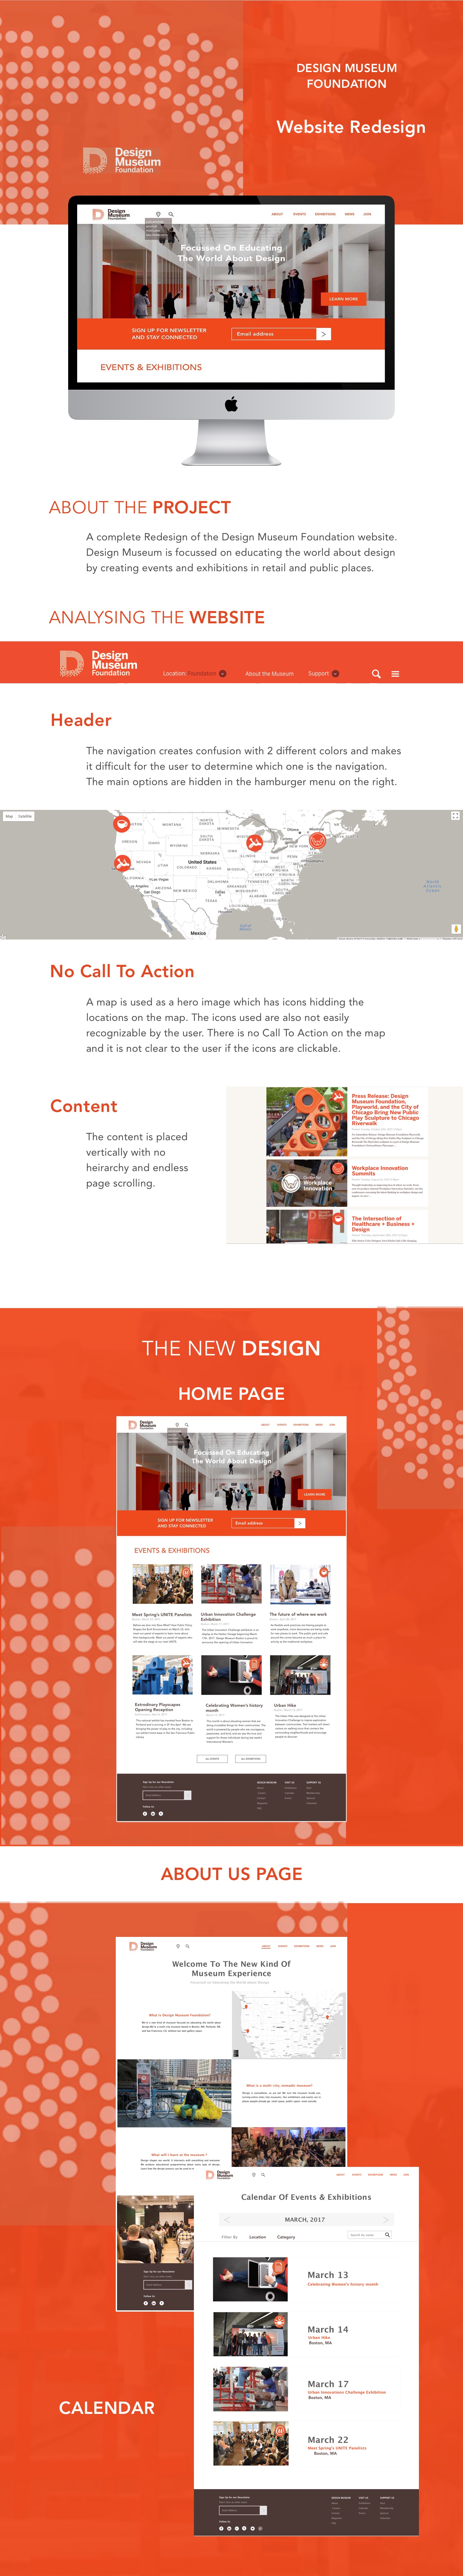 Design Museum Foundation Website Redesign Padma Kona